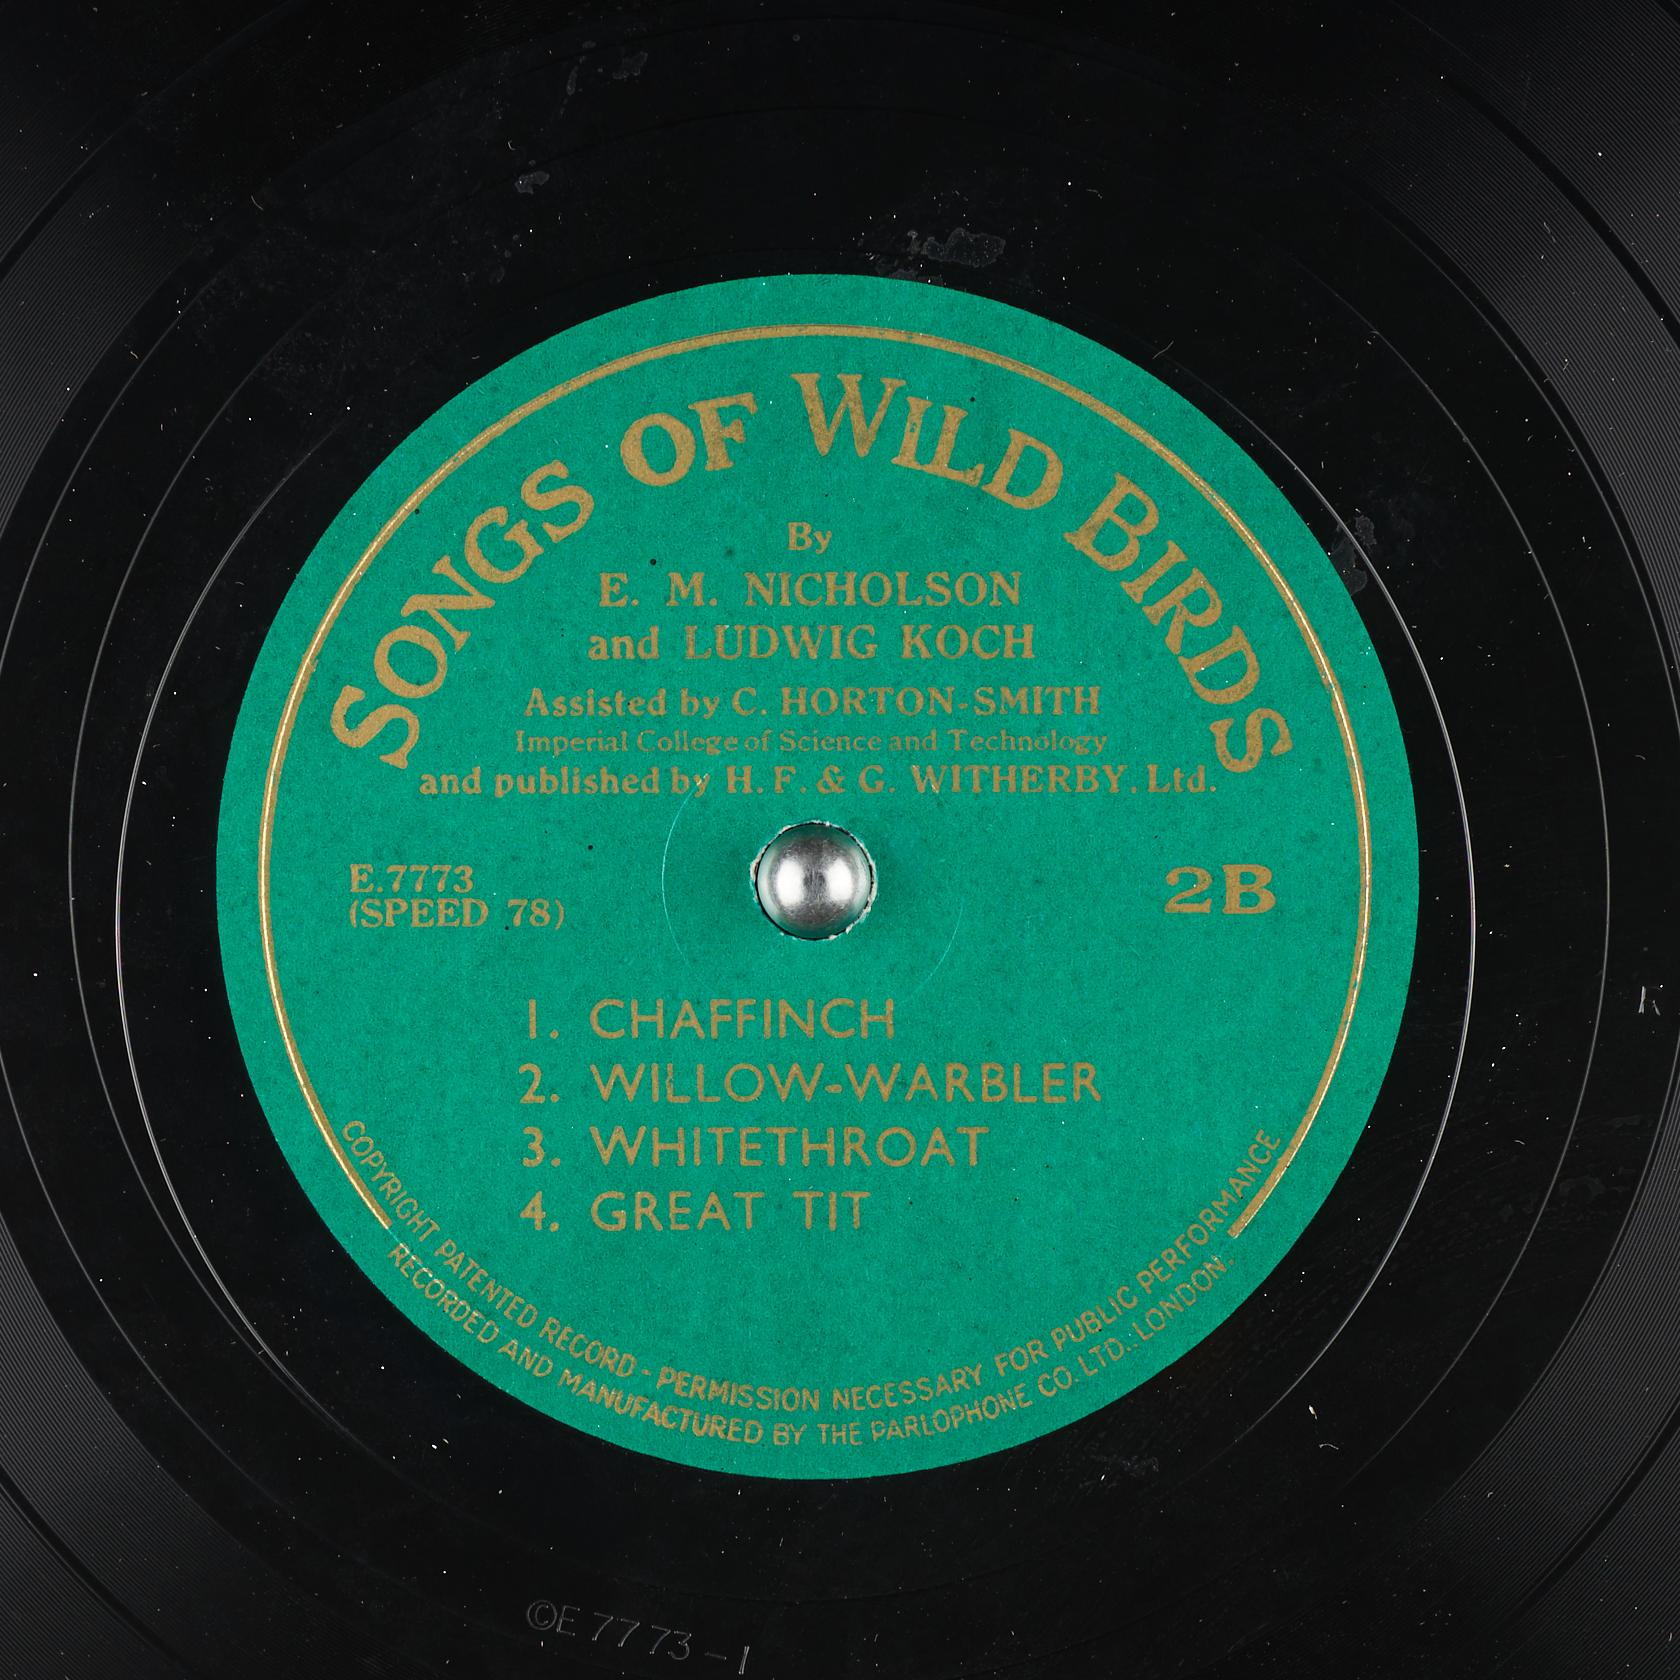 Songs of wild birds. Disc 2, Side B (E.7773)